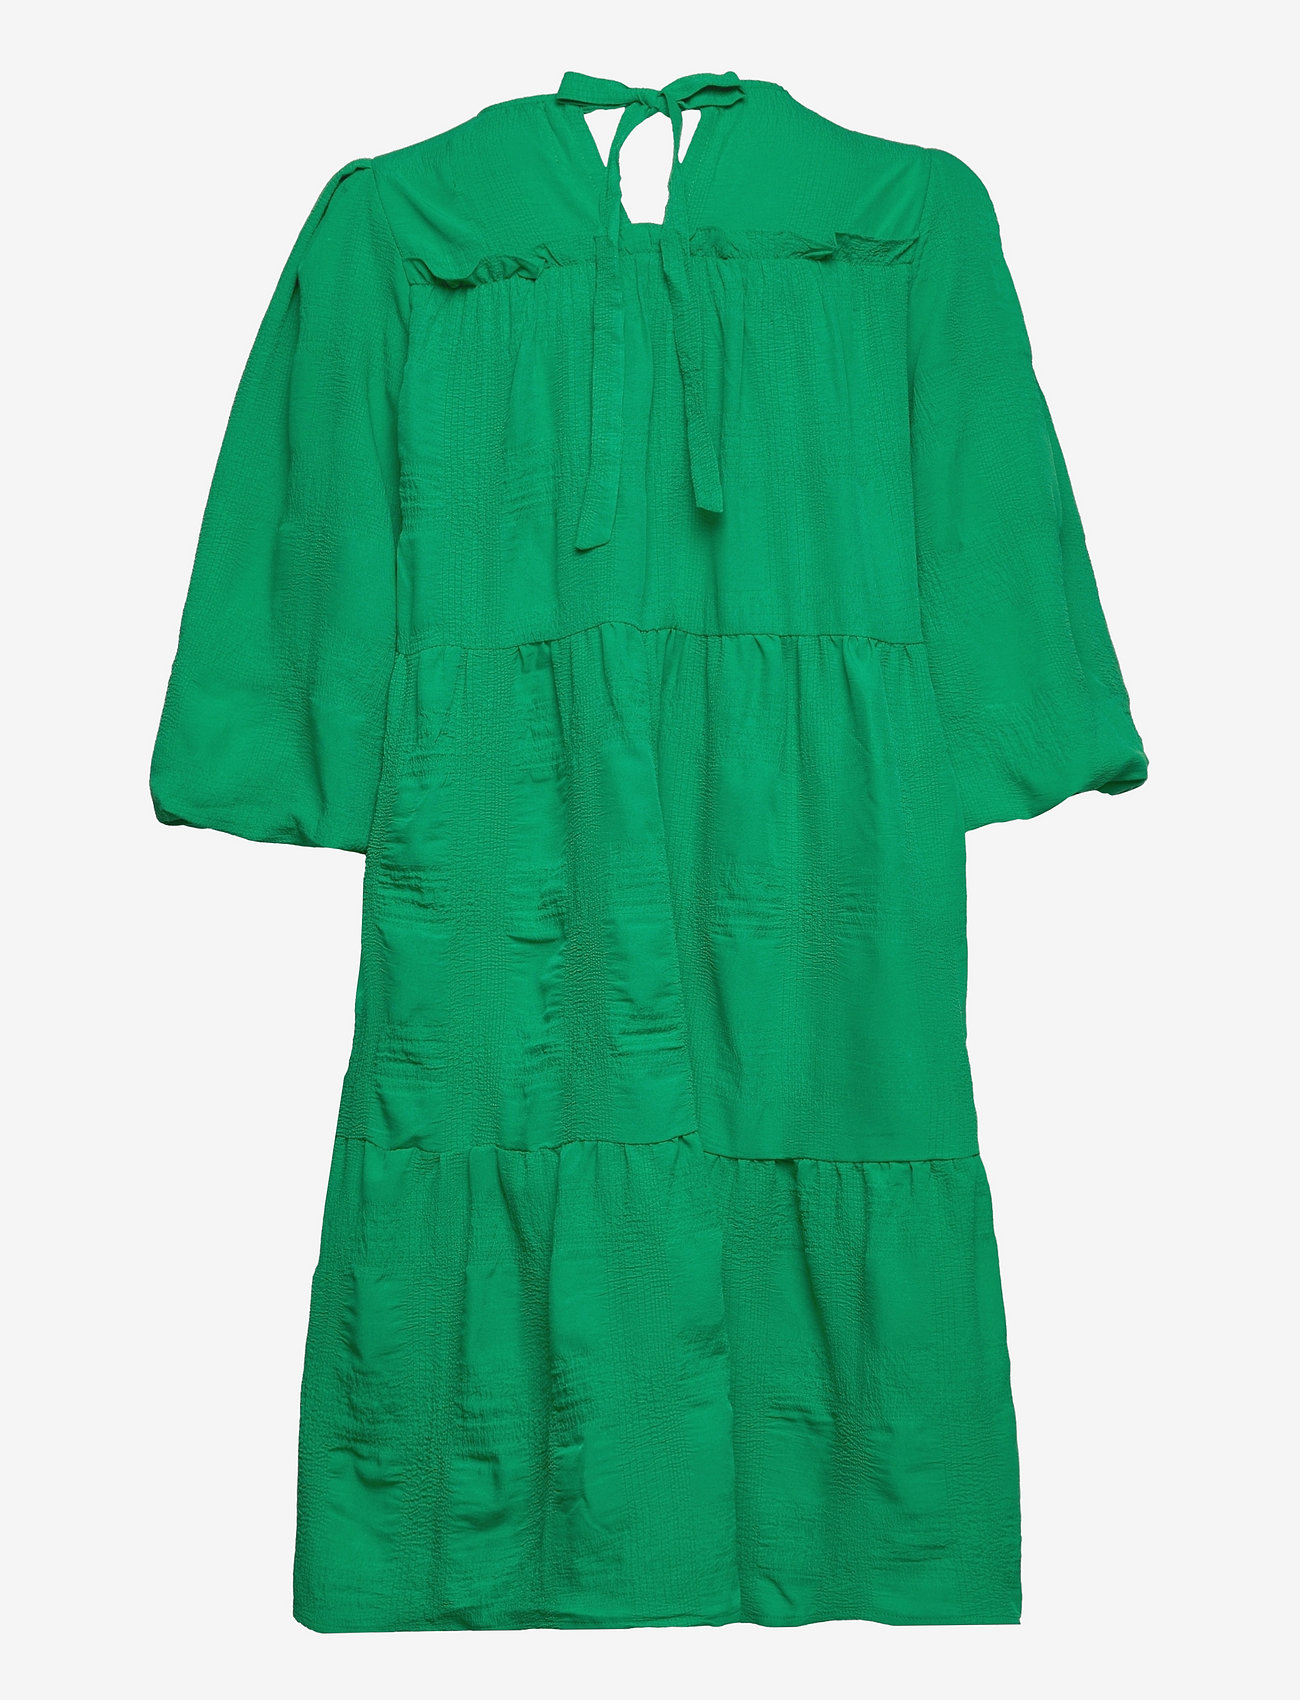 Minus - Lelia Dress - short dresses - ivy green - 1